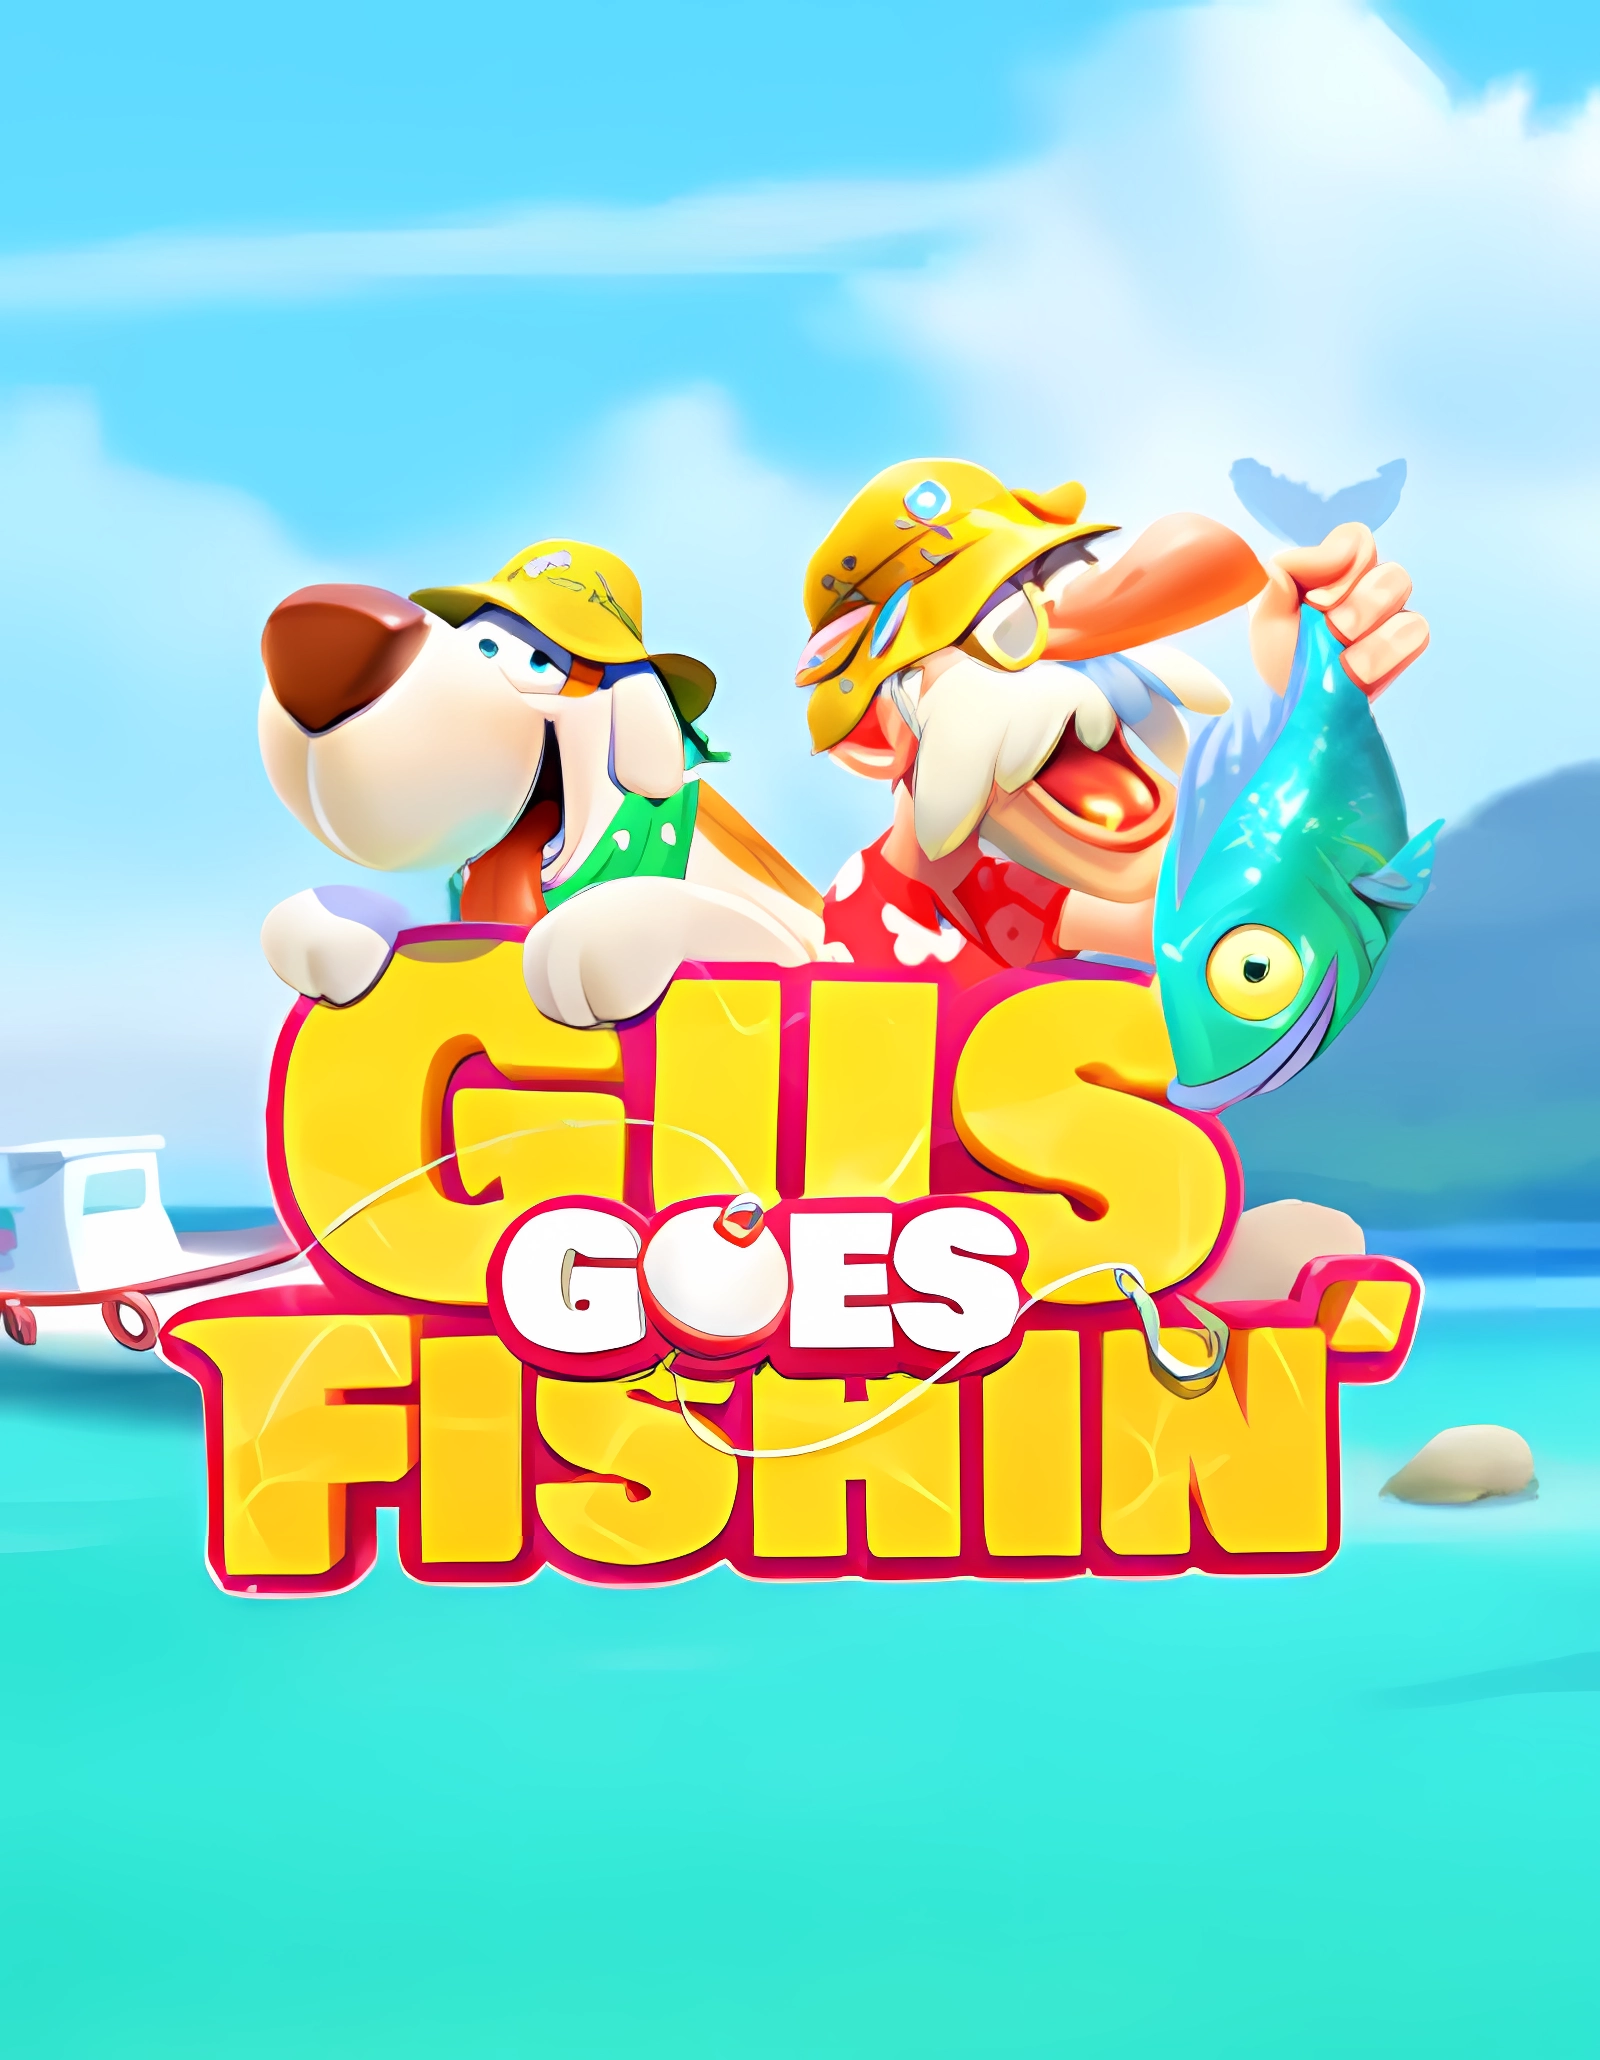 Play Free Demo of Gus Goes Fishin’ Slot by iSoftBet